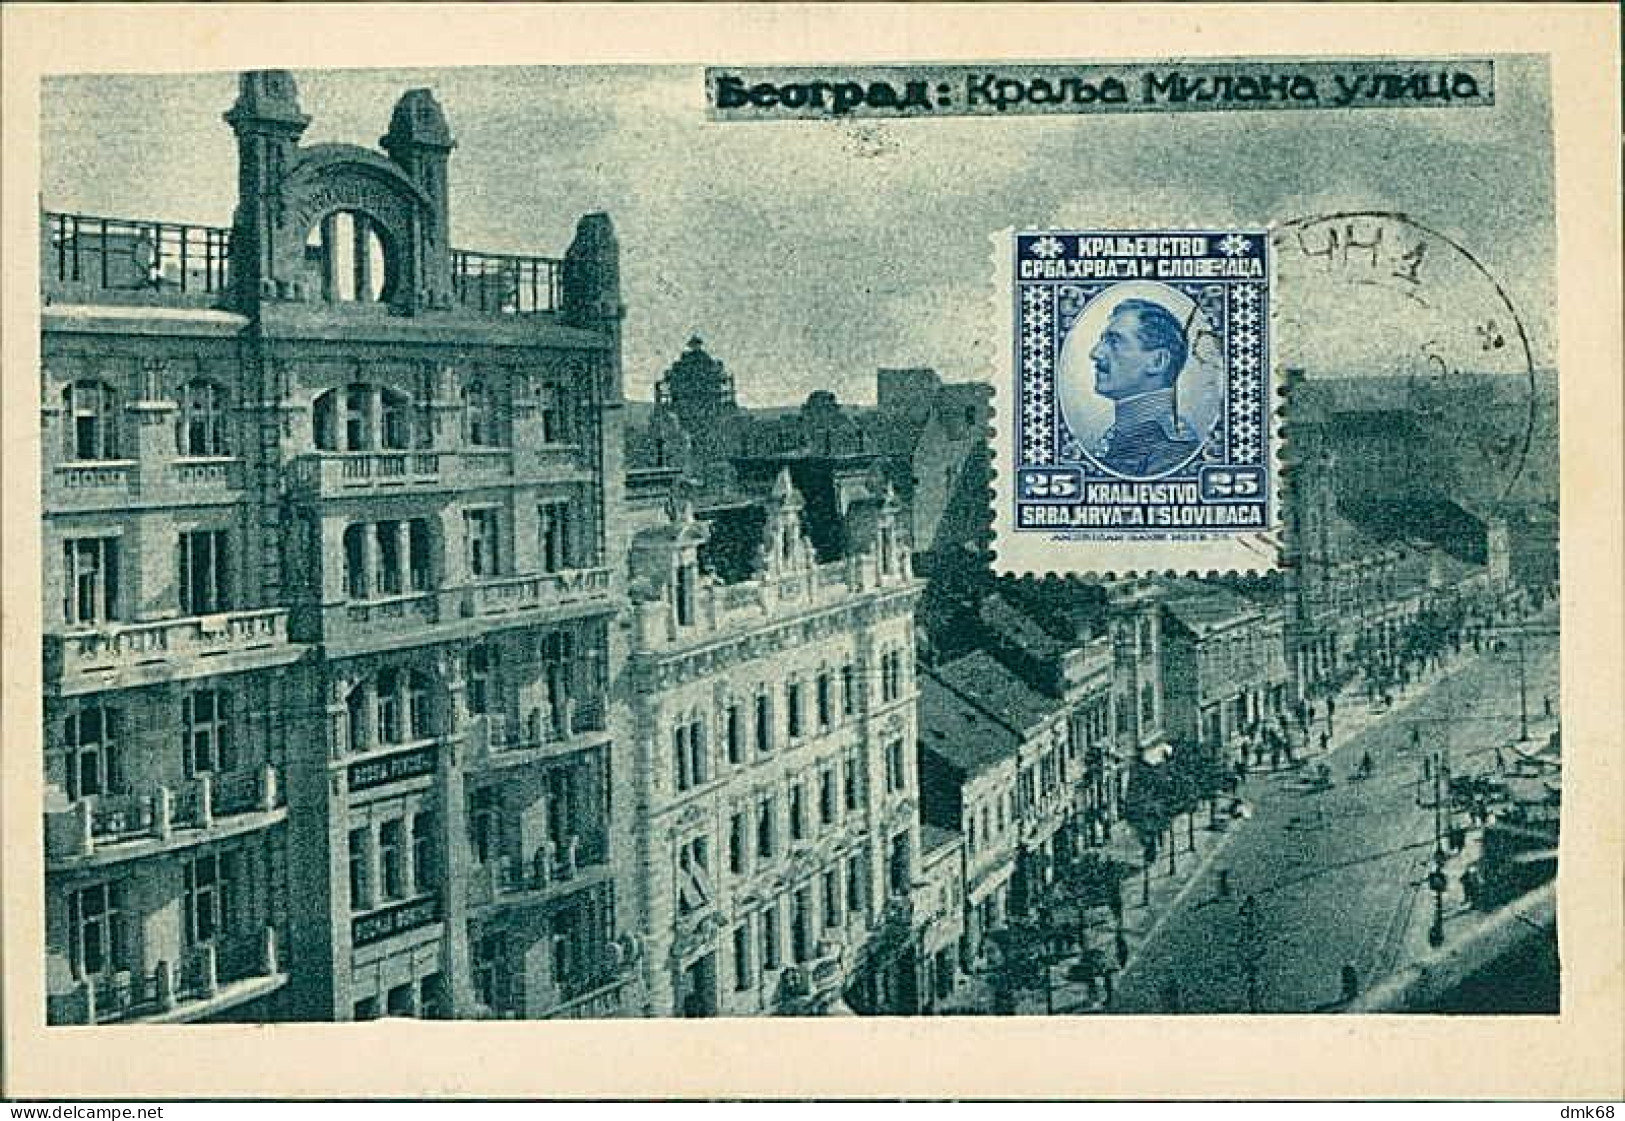 SERBIA - BEOGRAD - KRALJA MILANA ULICAM -  MAILED - 1920s - STAMP (17273) - Serbie